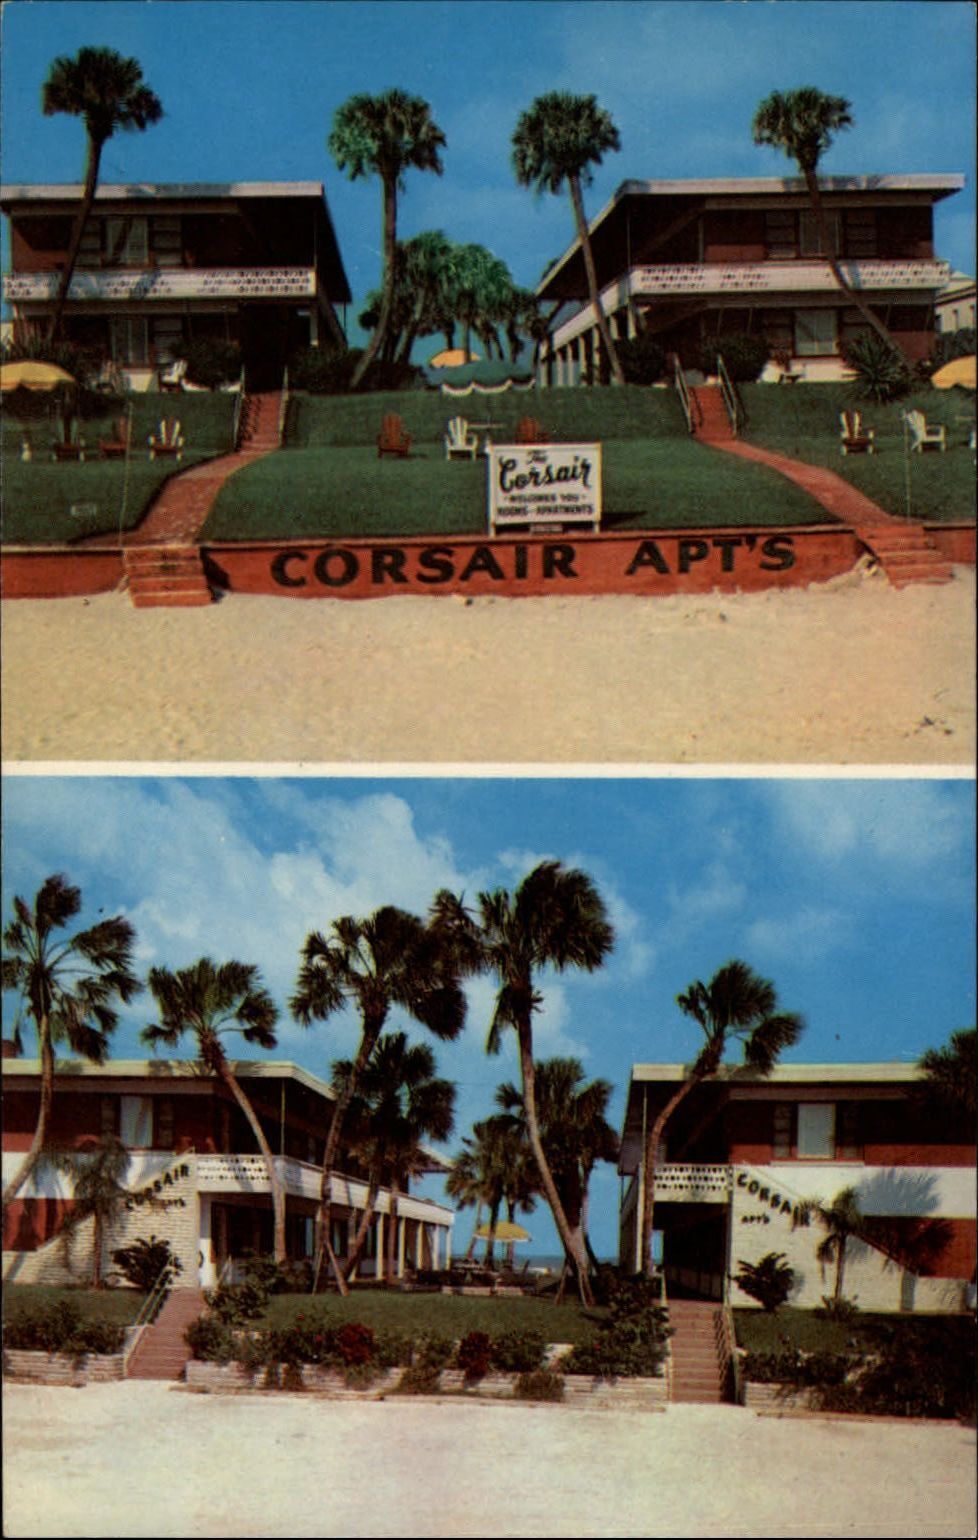 Corsair Apartments Daytona Beach Florida two views ~ 1967 vintage postcard